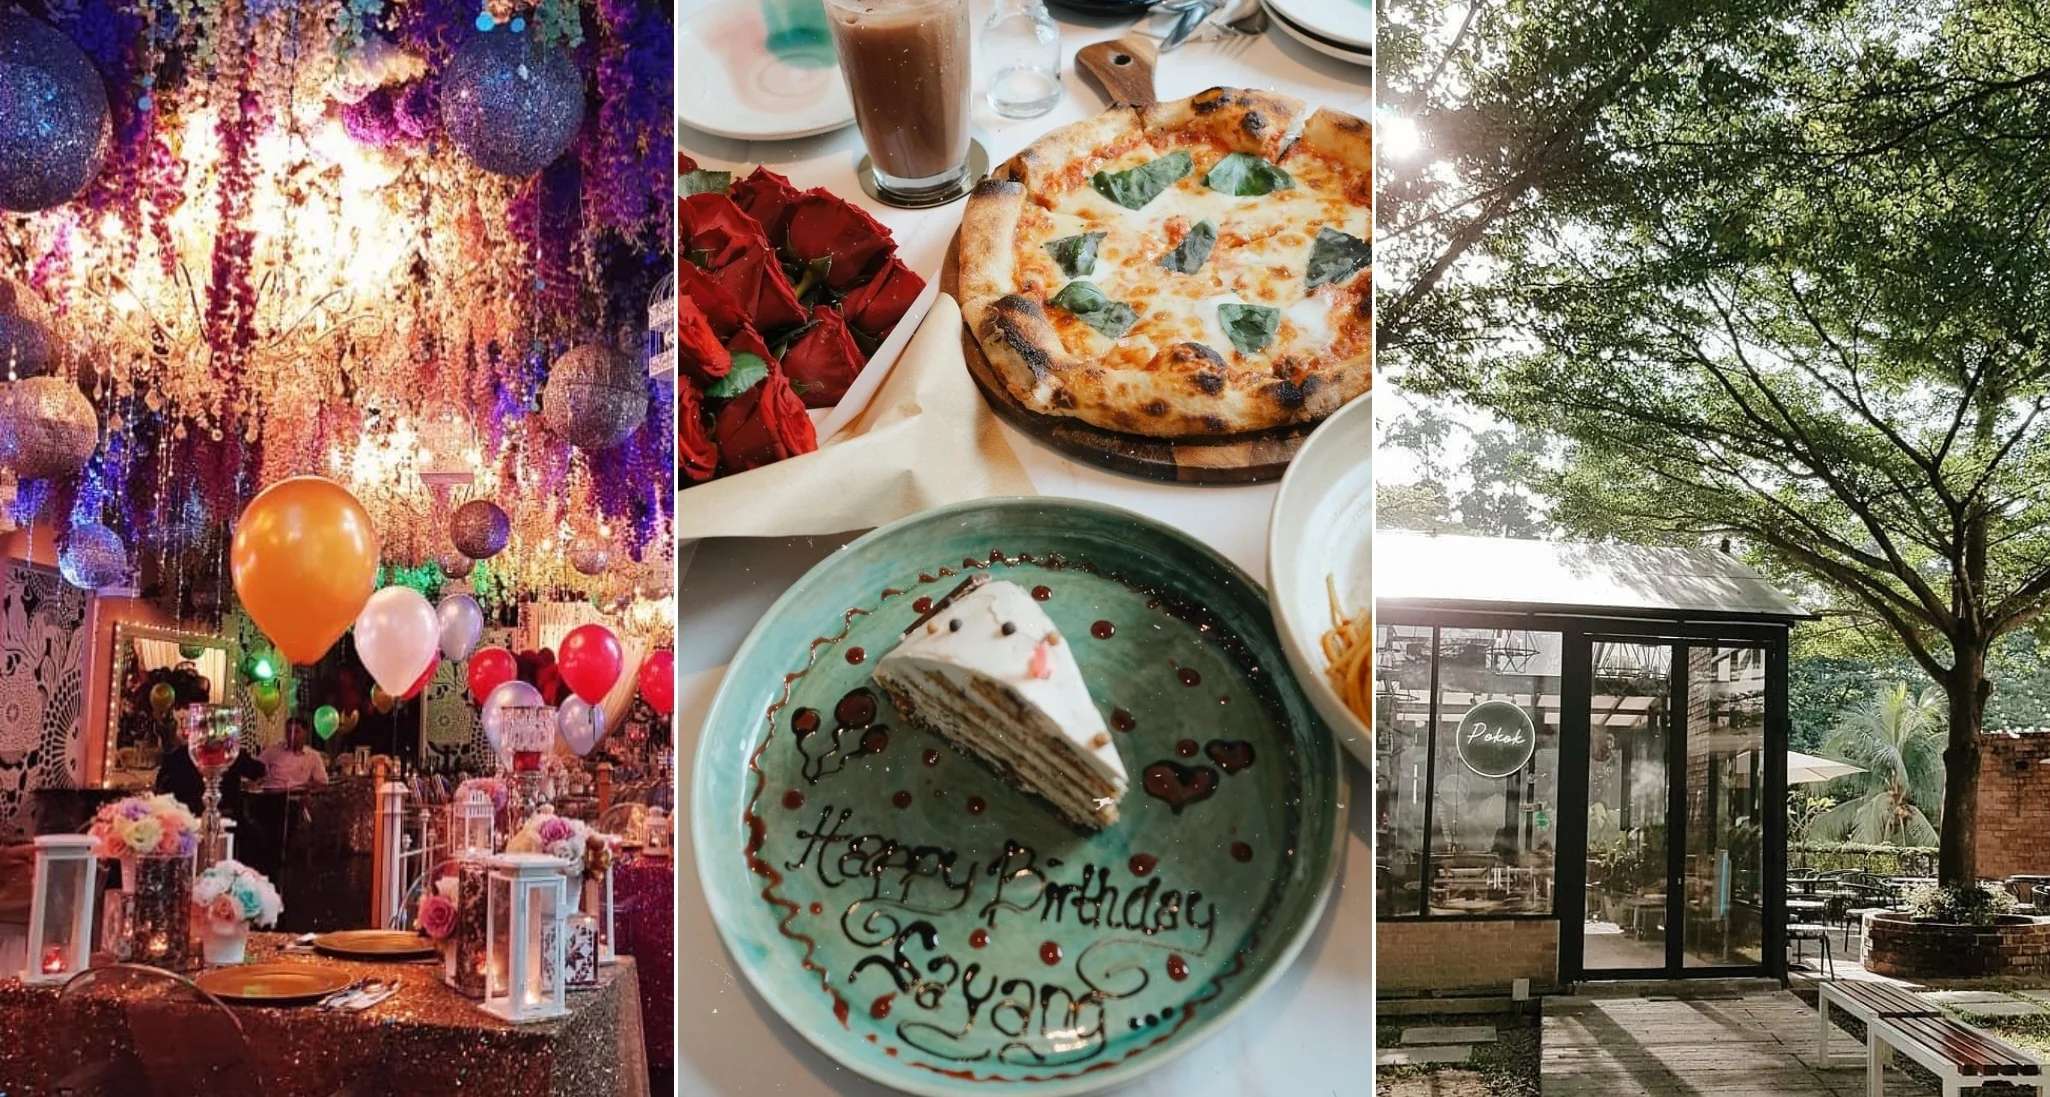 10 Halal Restaurants In Kuala Lumpur For An Amazing Birthday Celebration